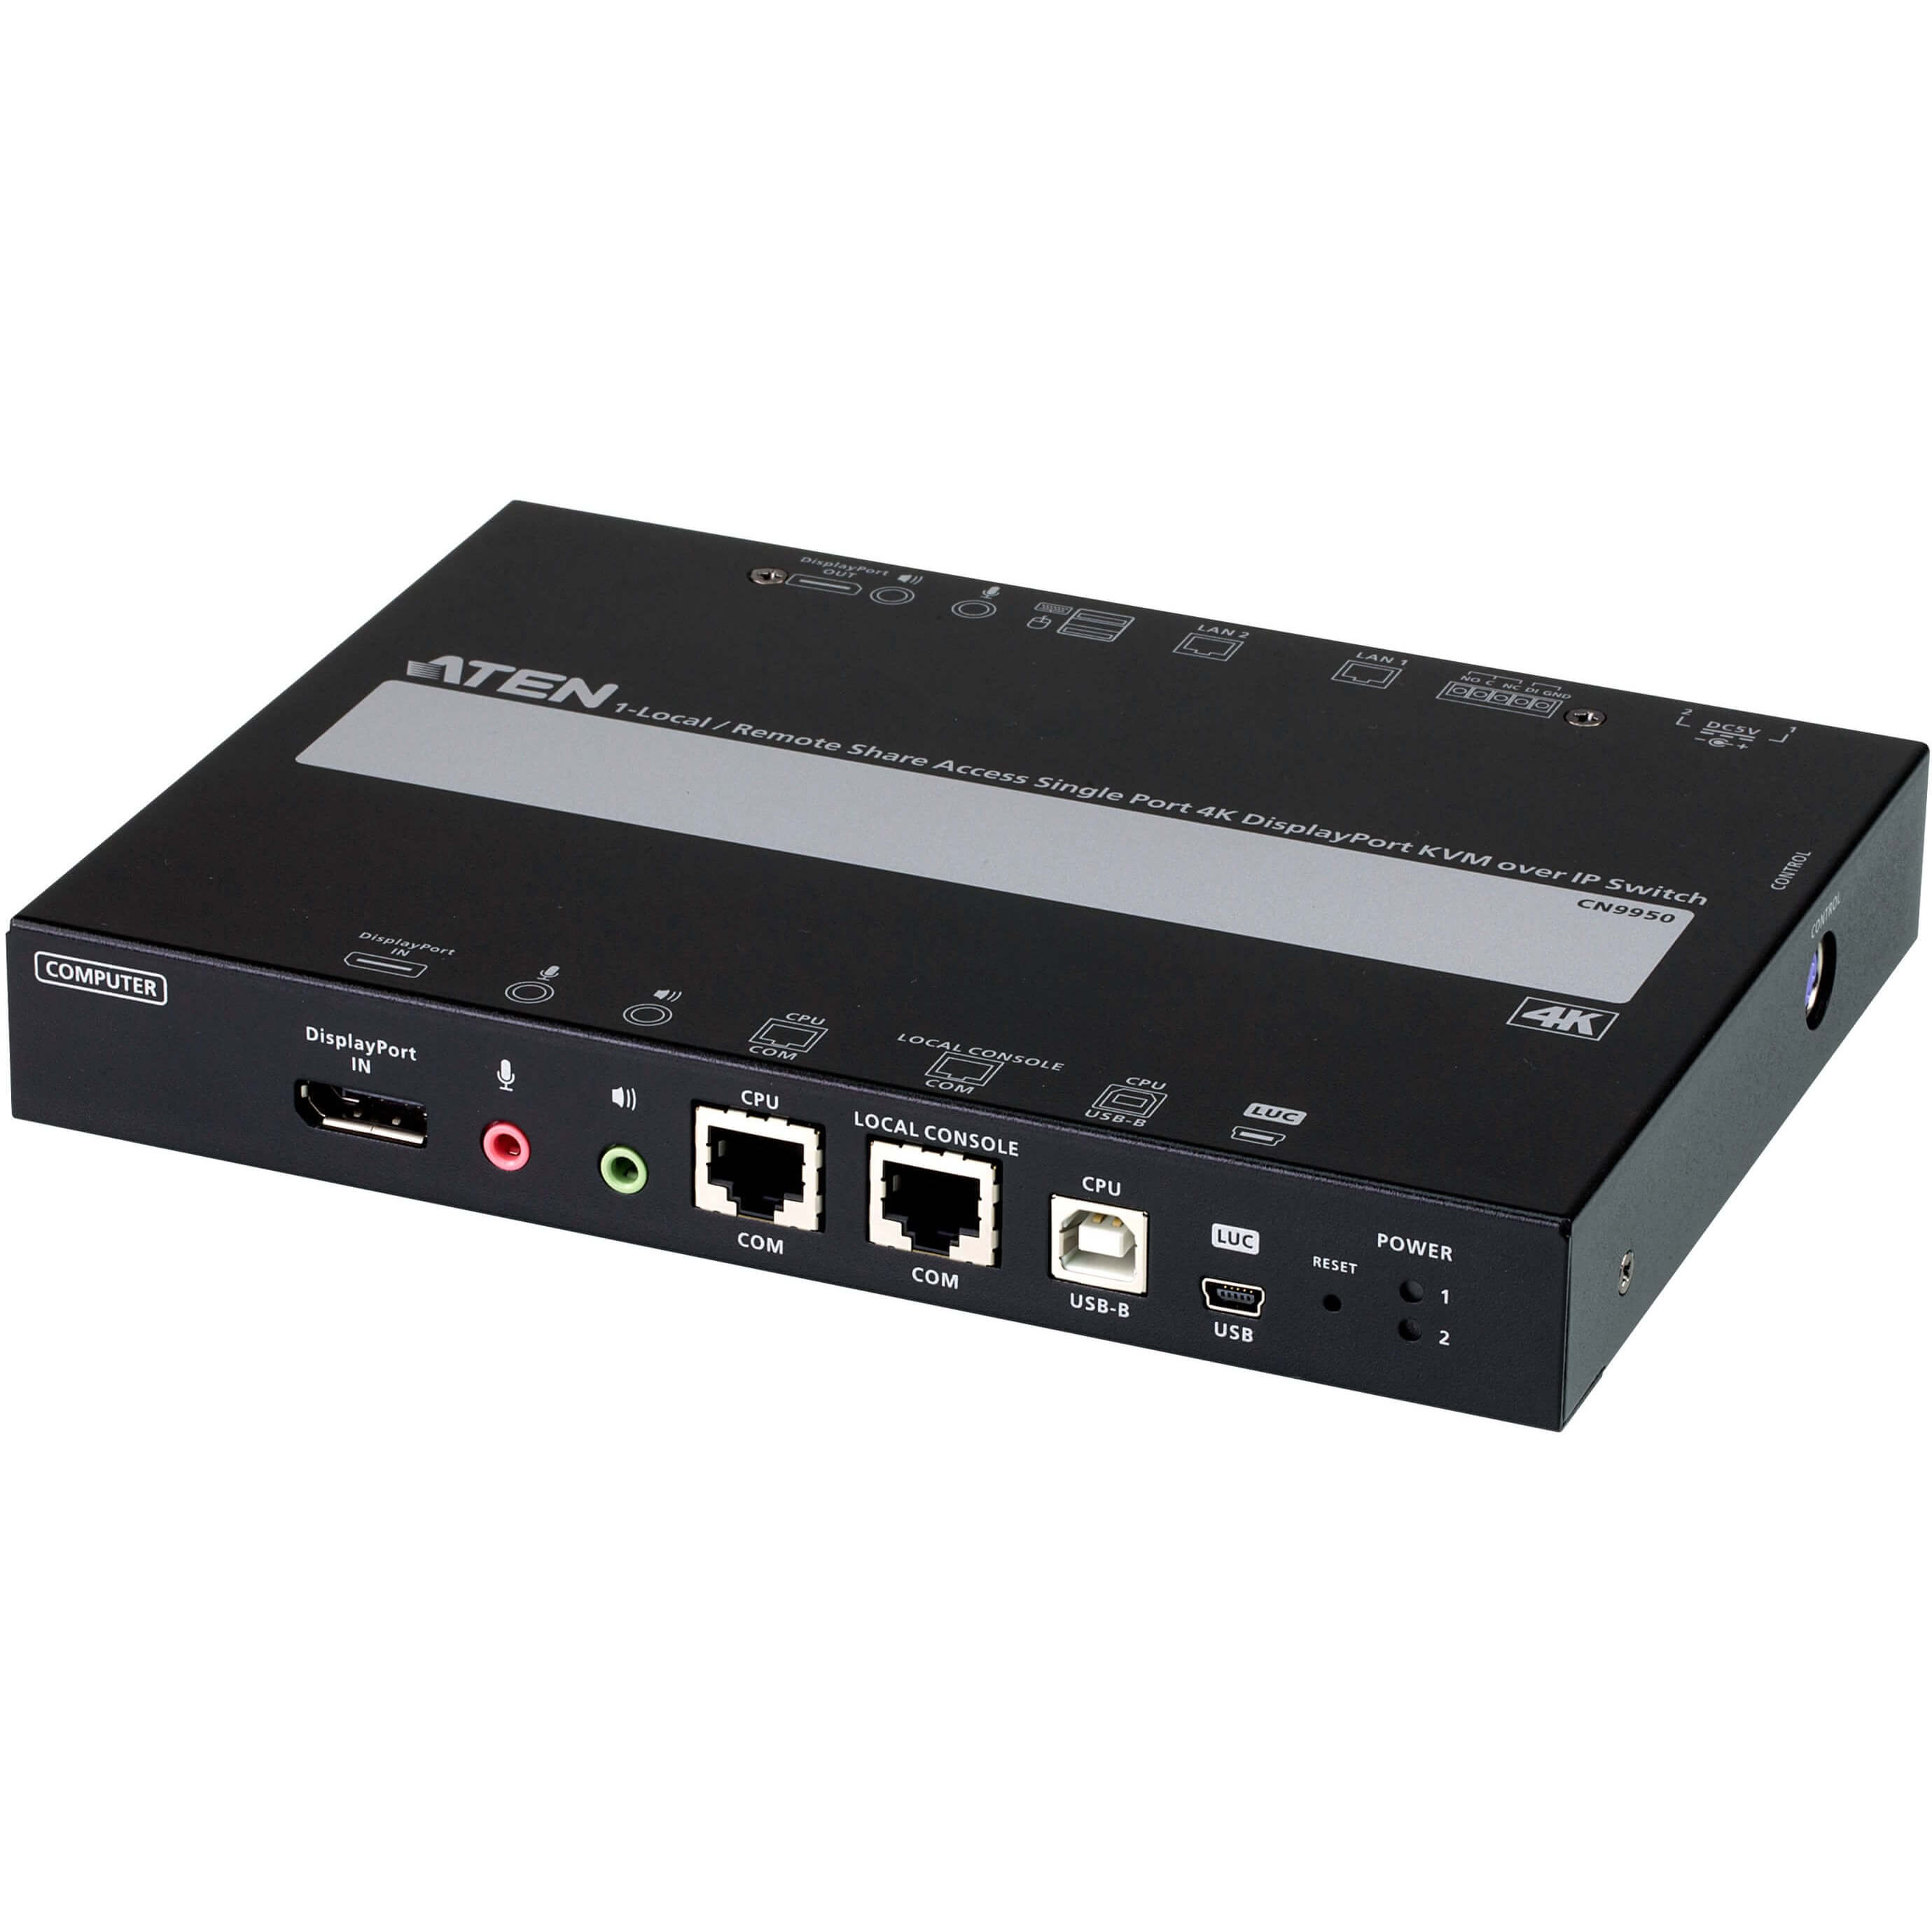   KVM extender   Solution dport console KVM DP 4K+ RS232 over IP CN9950-AT-G